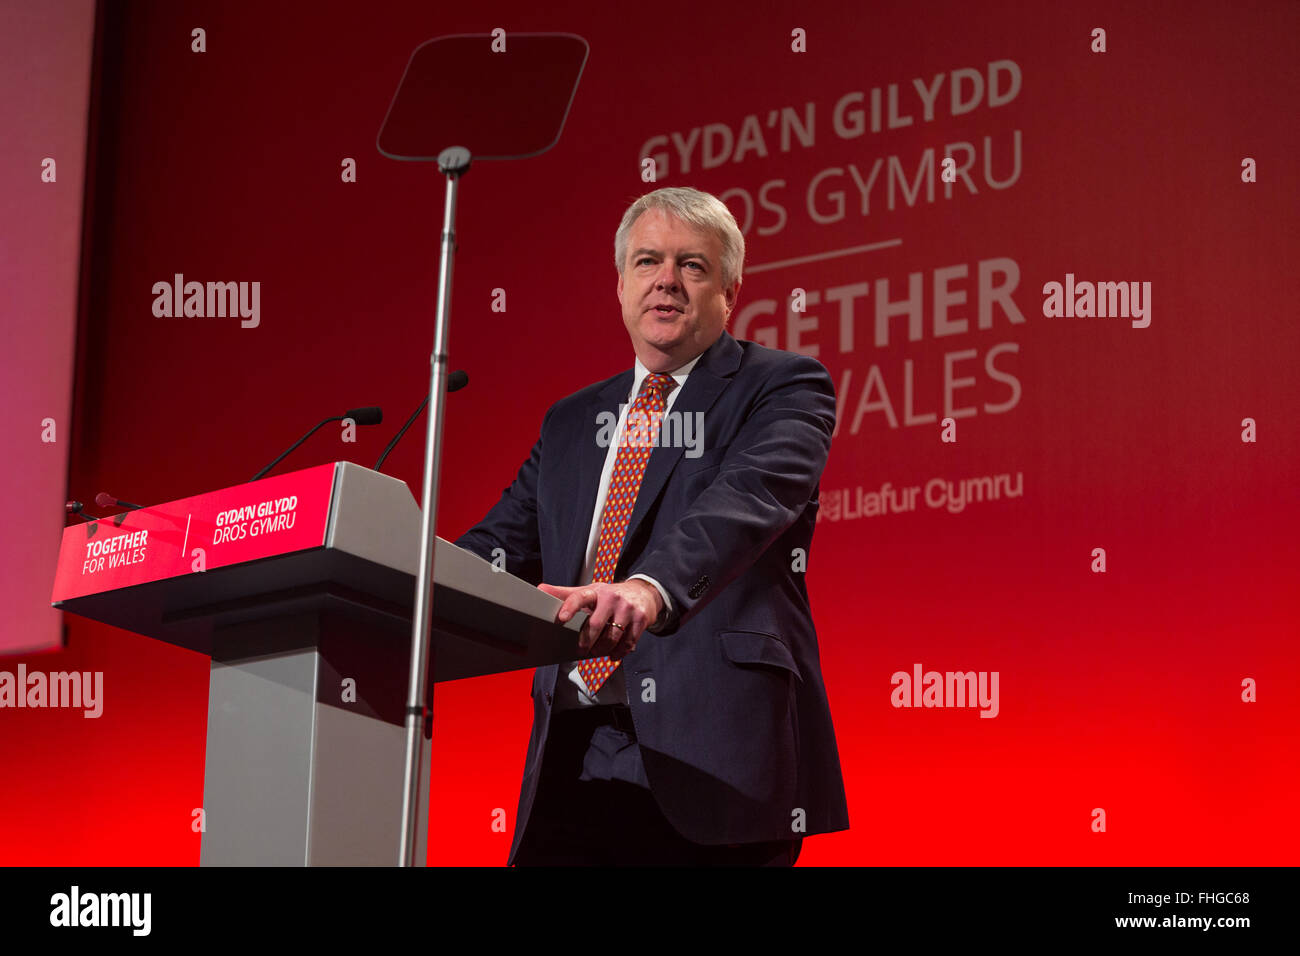 Erster Minister Carwyn Jones spreche zu den Welsh Labour Conference 2016 Austragungsort Cymru Llandudno © Alan Dop Alamy Live News Stockfoto